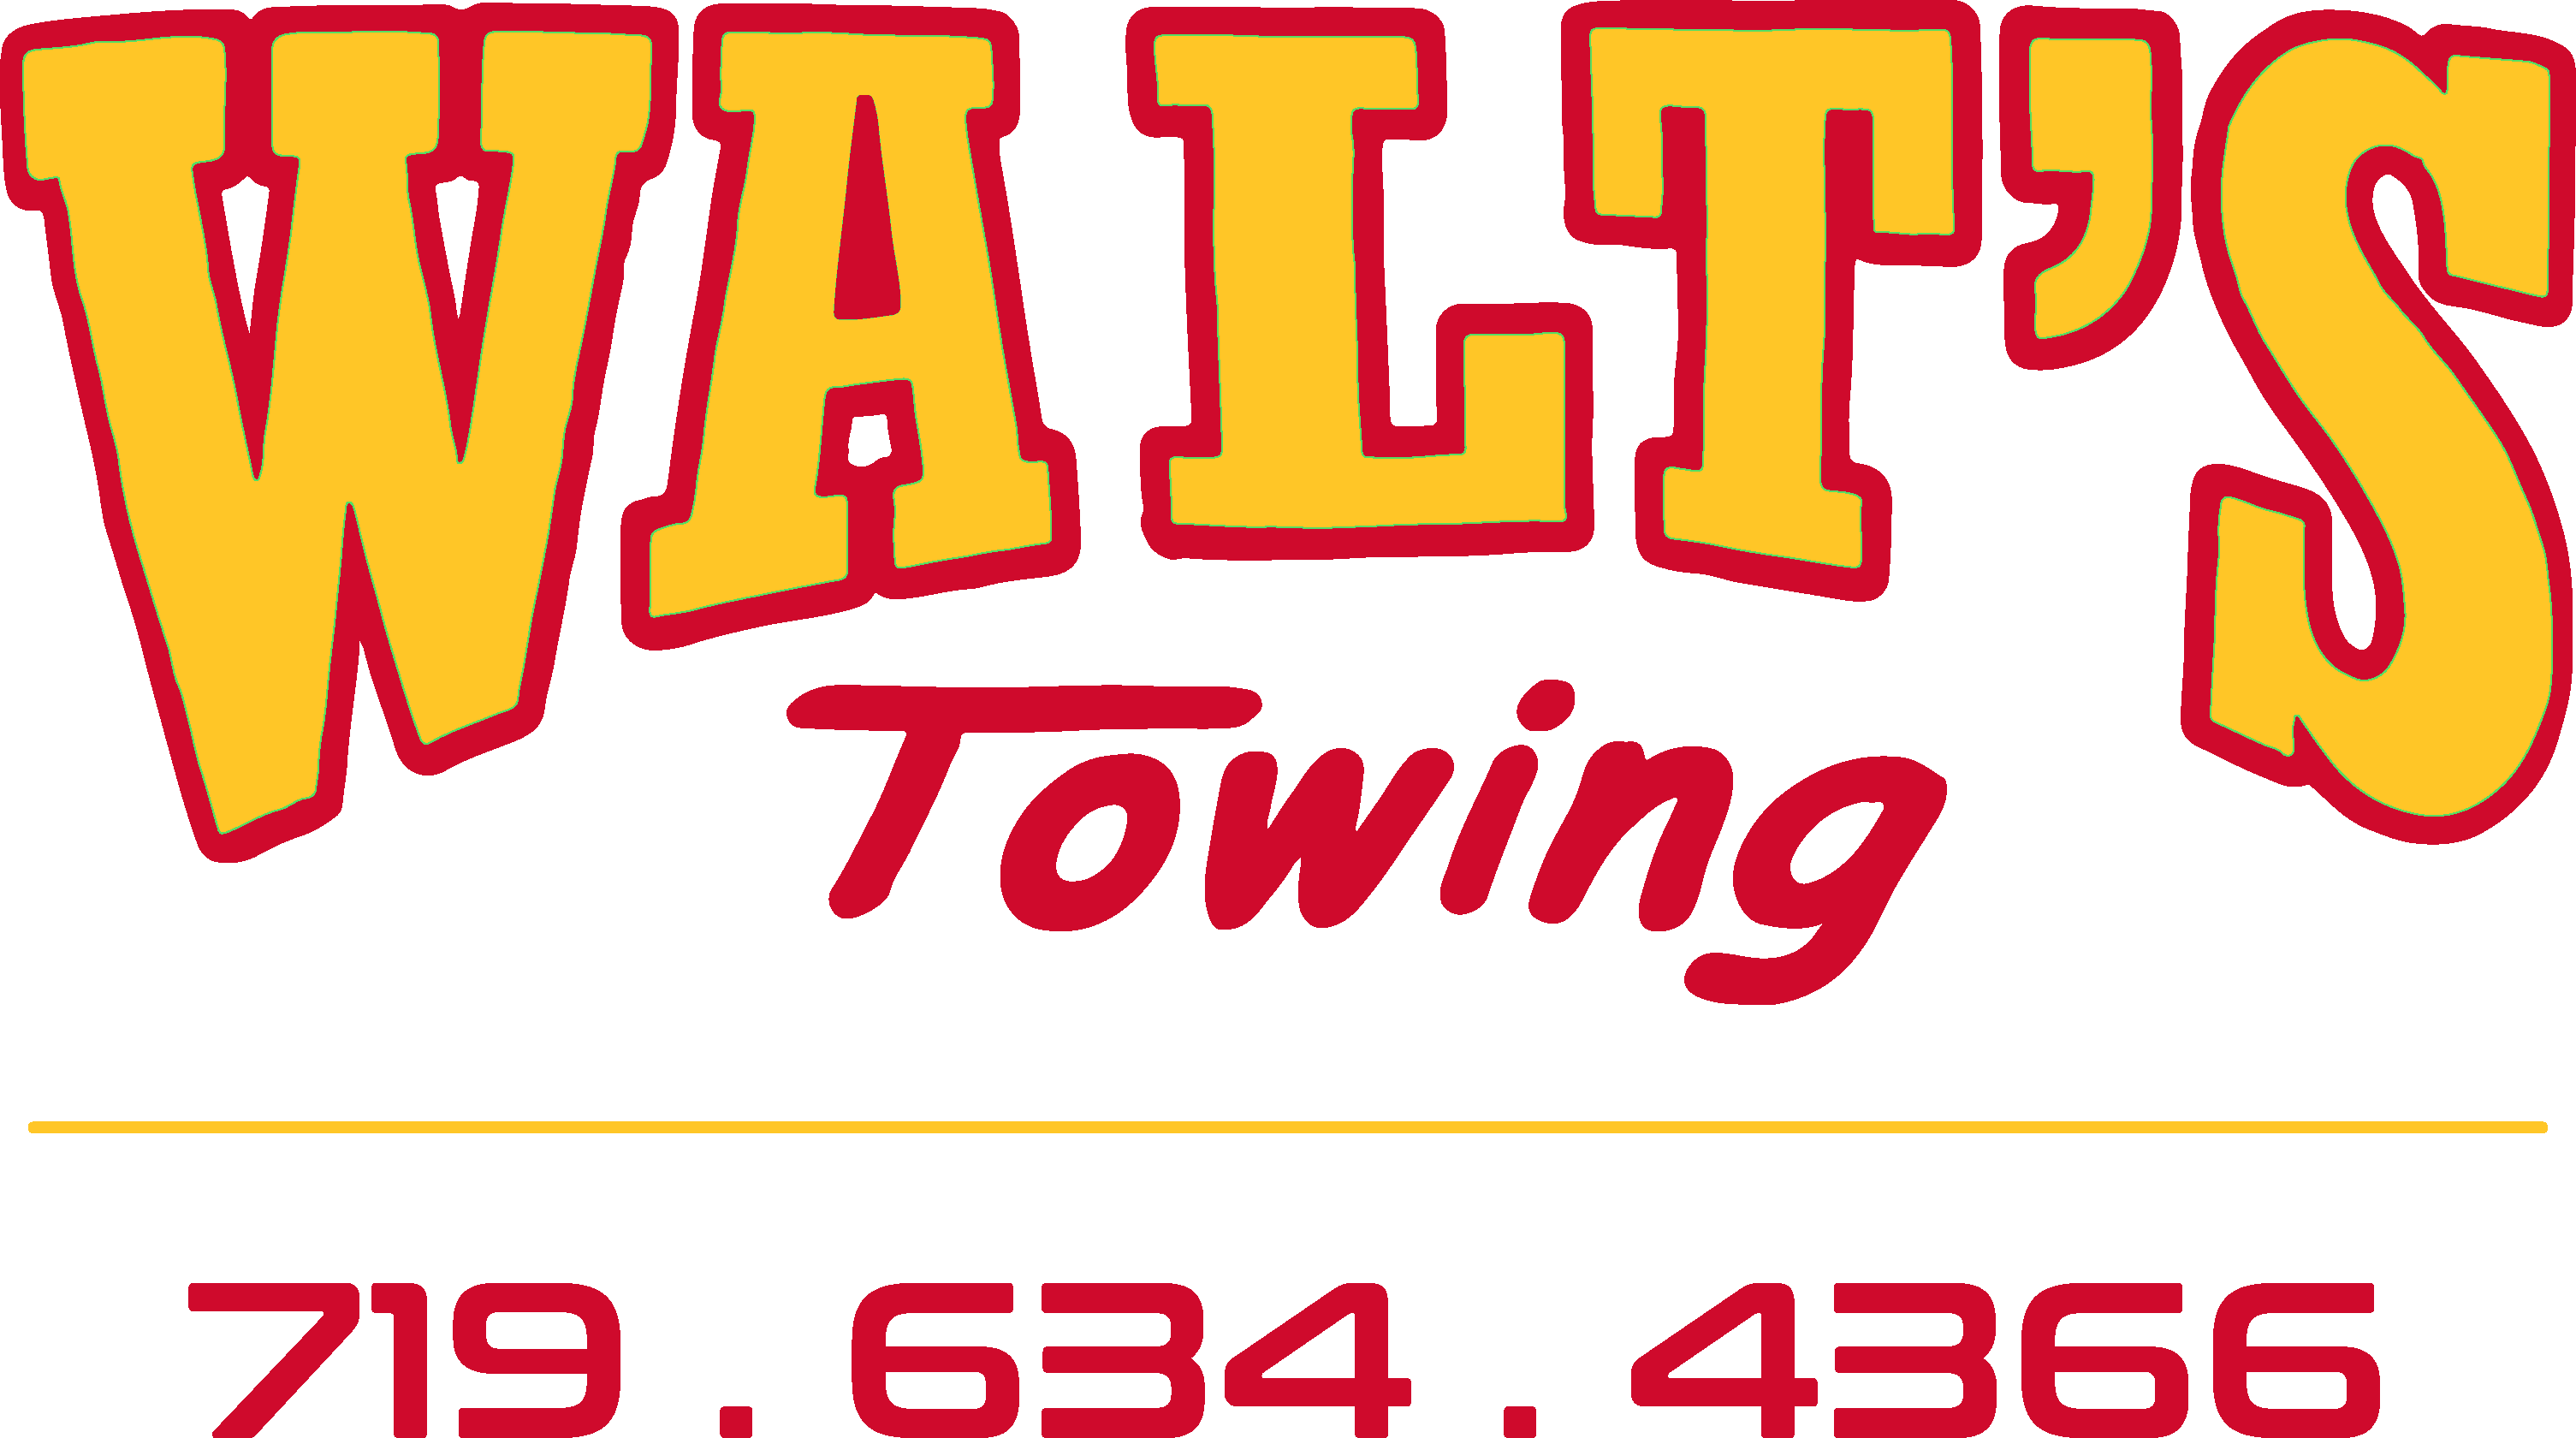 0912 A22 Walts Towing Logo Fb Proof 03 1